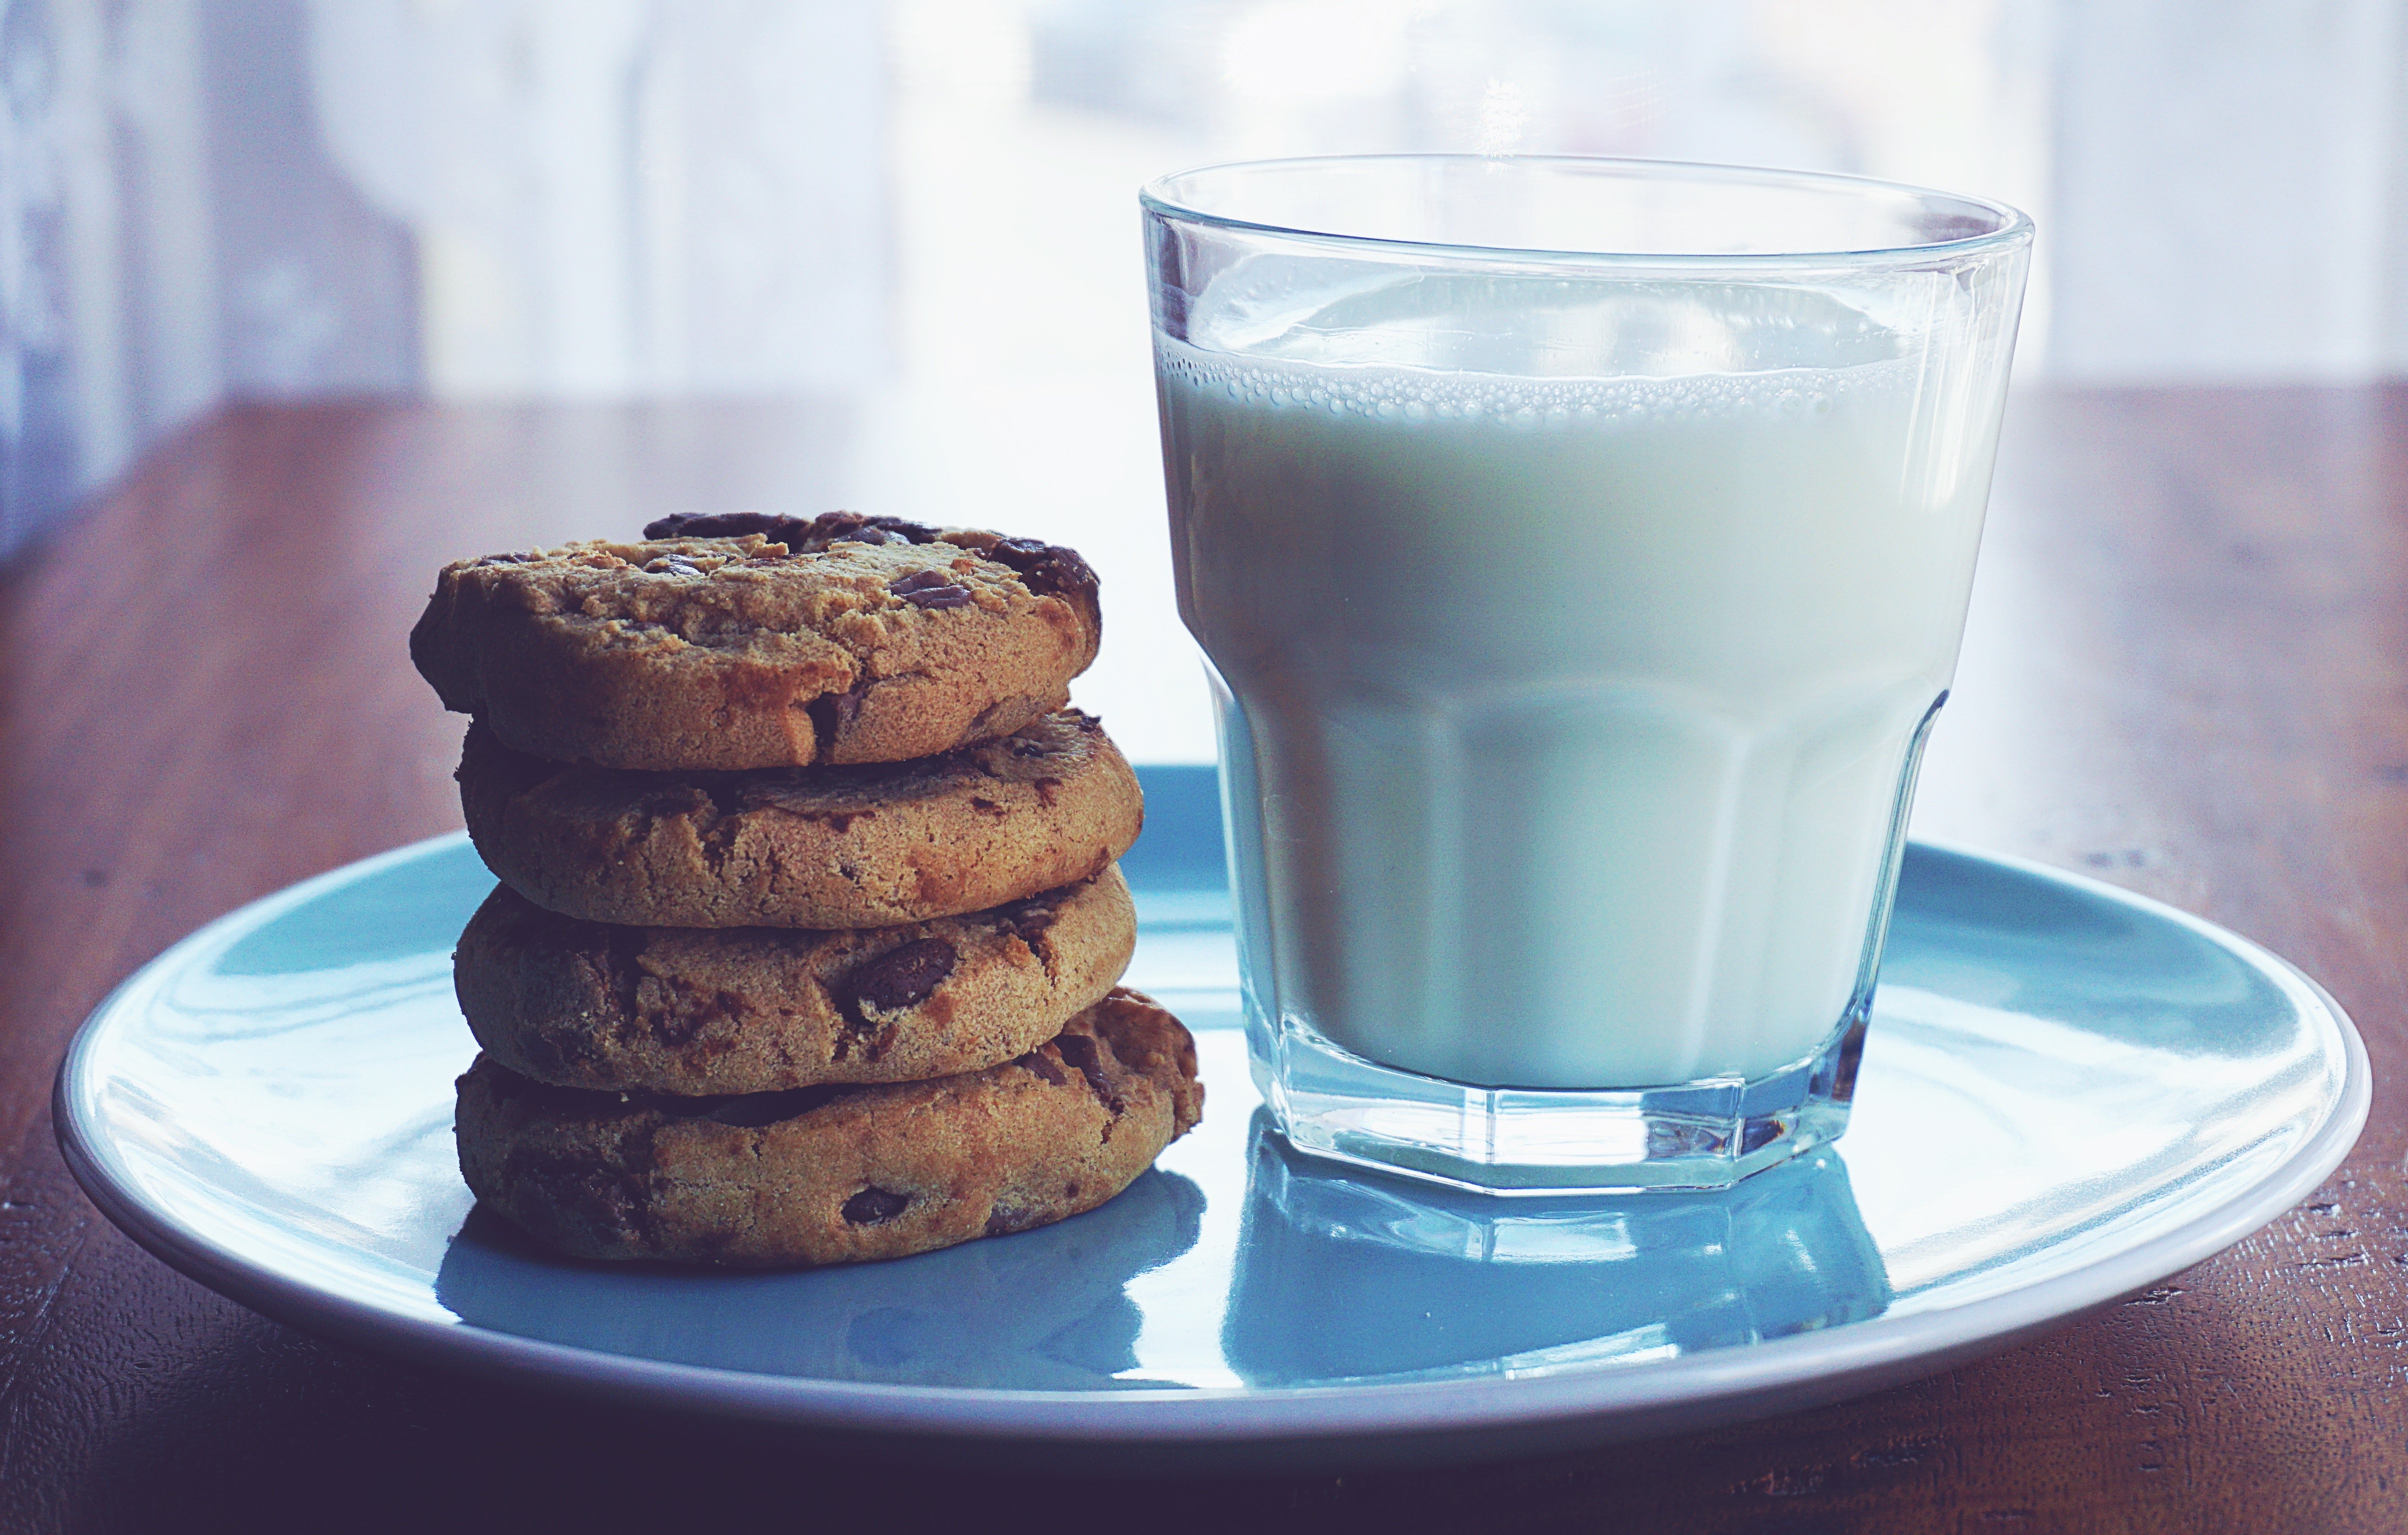 Allison prepared milk and cookies for Rick. | Source: Pexels